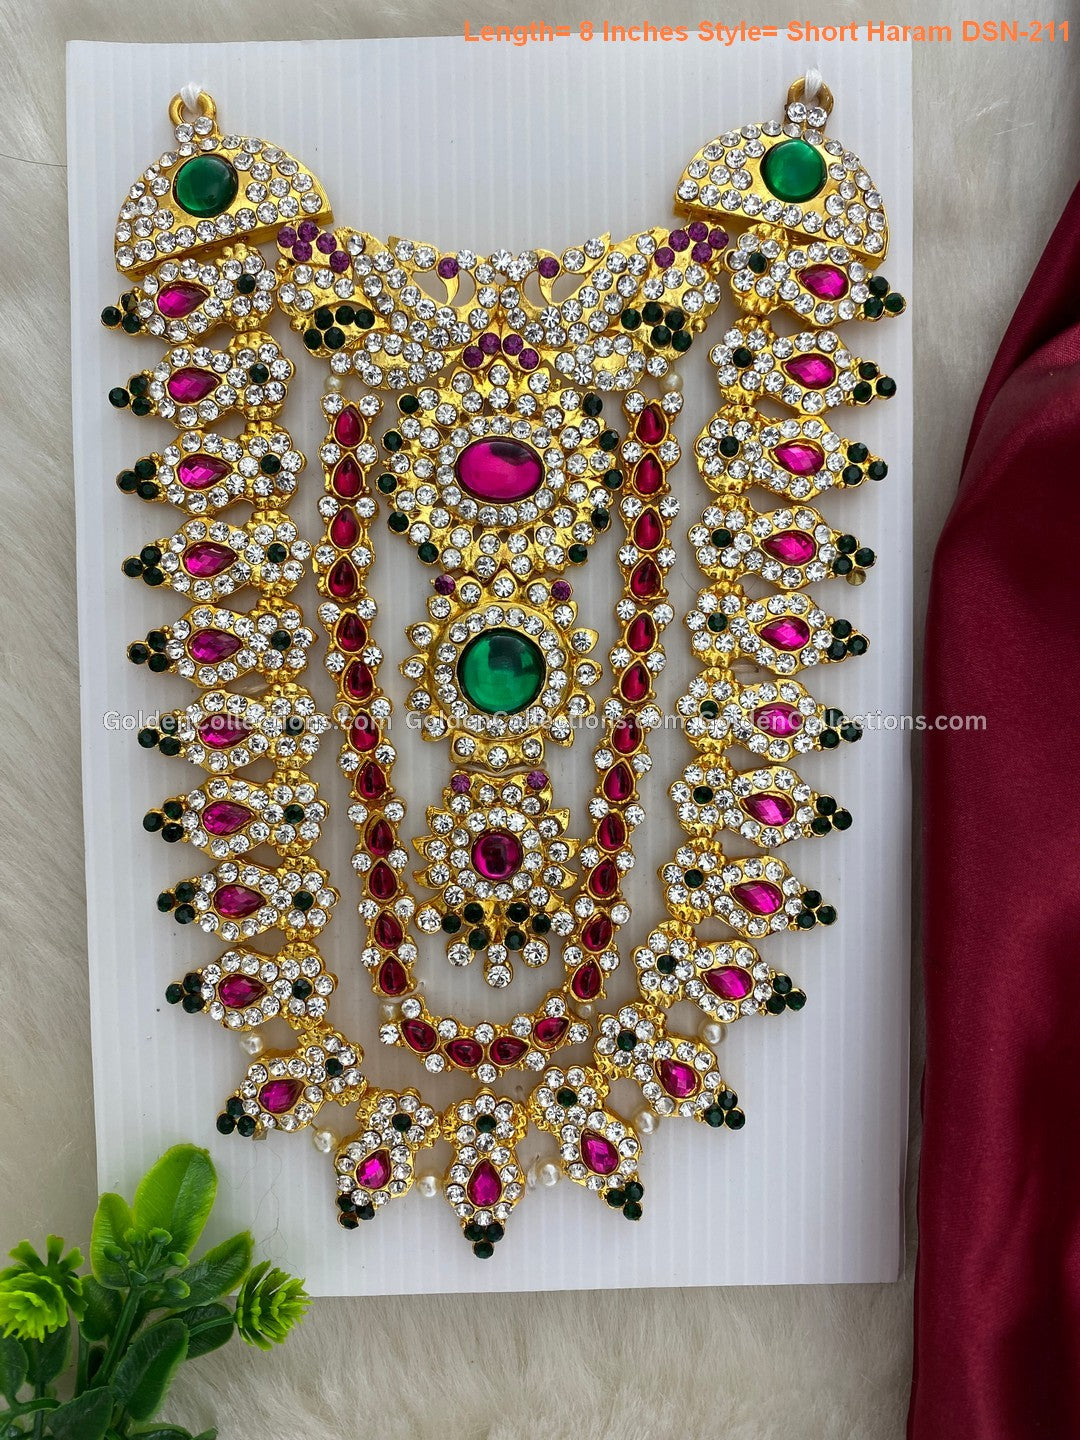 Varalakshmi Devi Jewelry - Buy Deity Ornaments Online - DSN-211